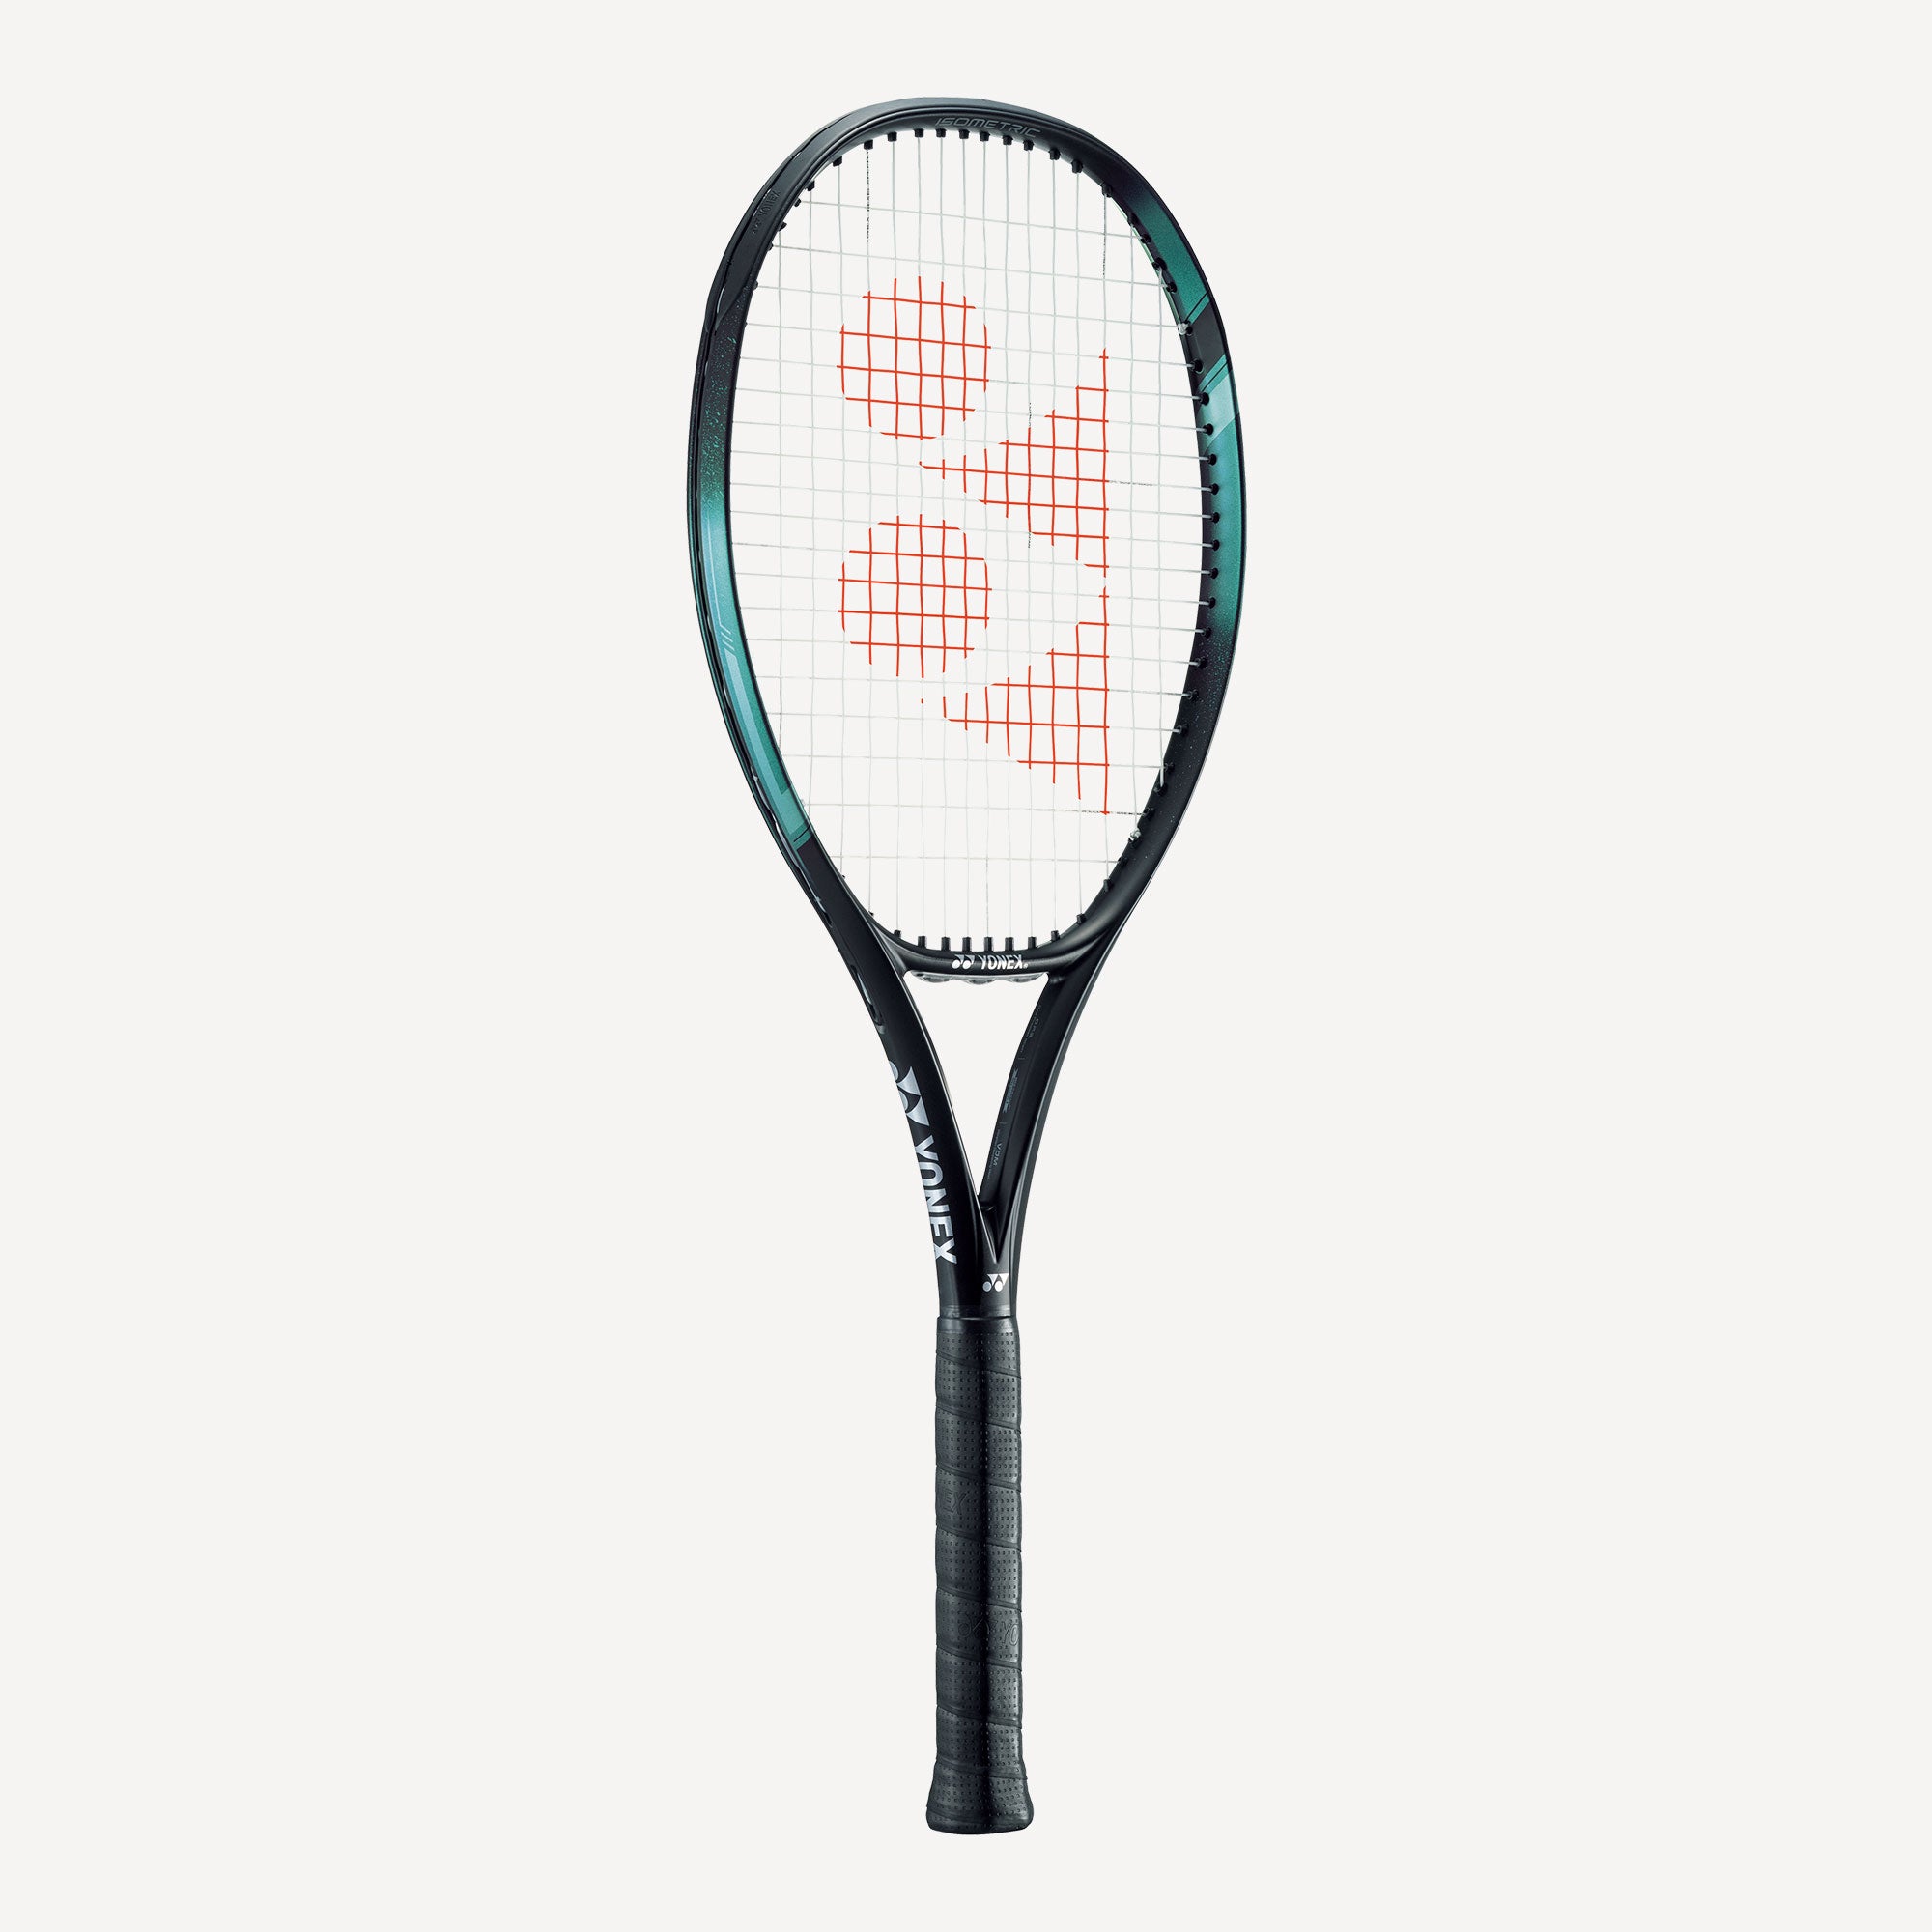 Yonex Tennis Equipment - Rackets, Bags, Strings & Accessories 